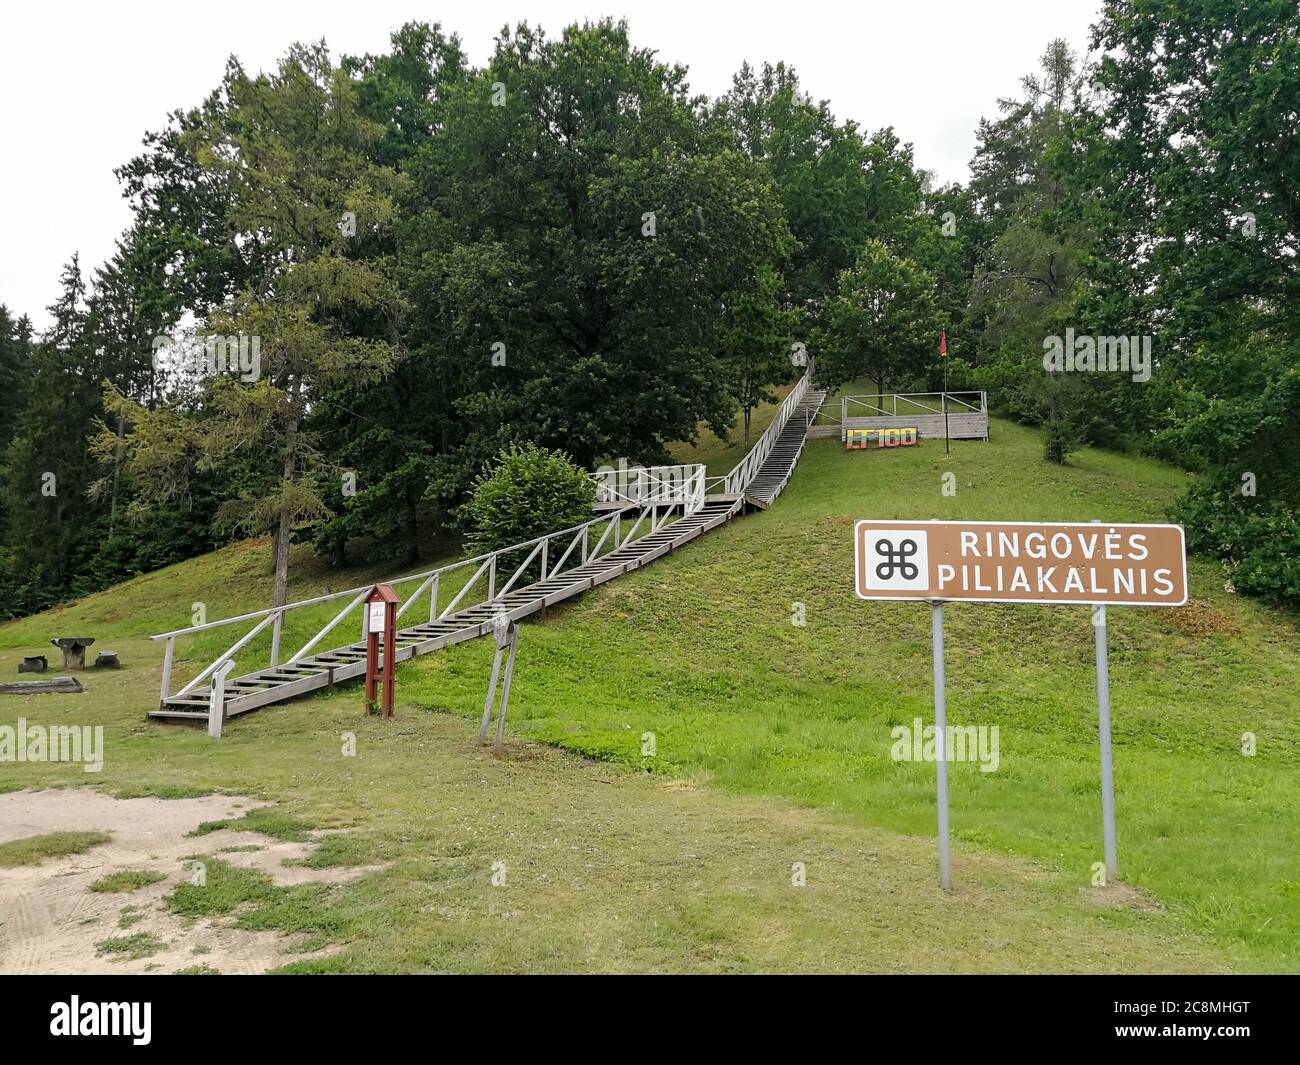 Ringove mound (Ringoves piliakalnis) in Lithuania Stock Photo